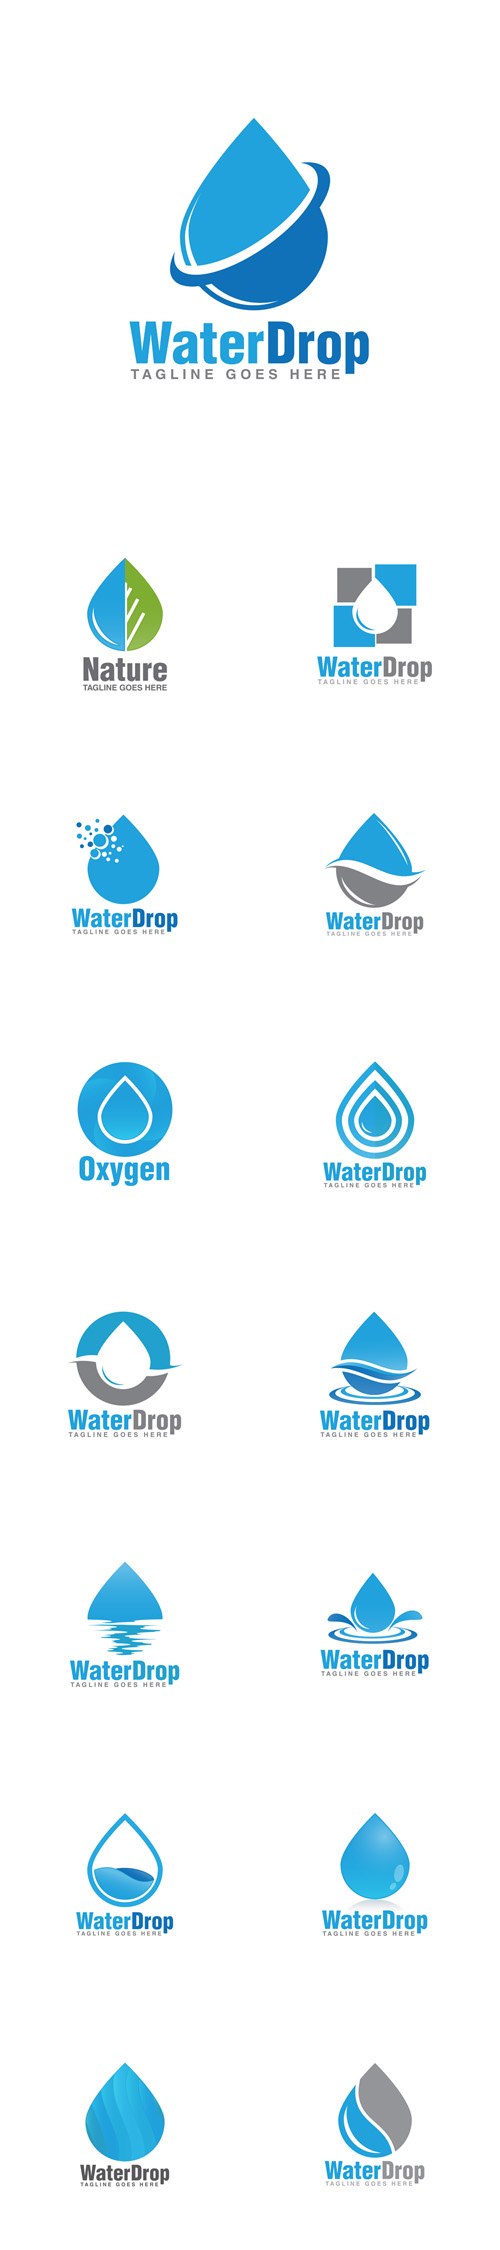 Vectors - Water Drop Logo Icons